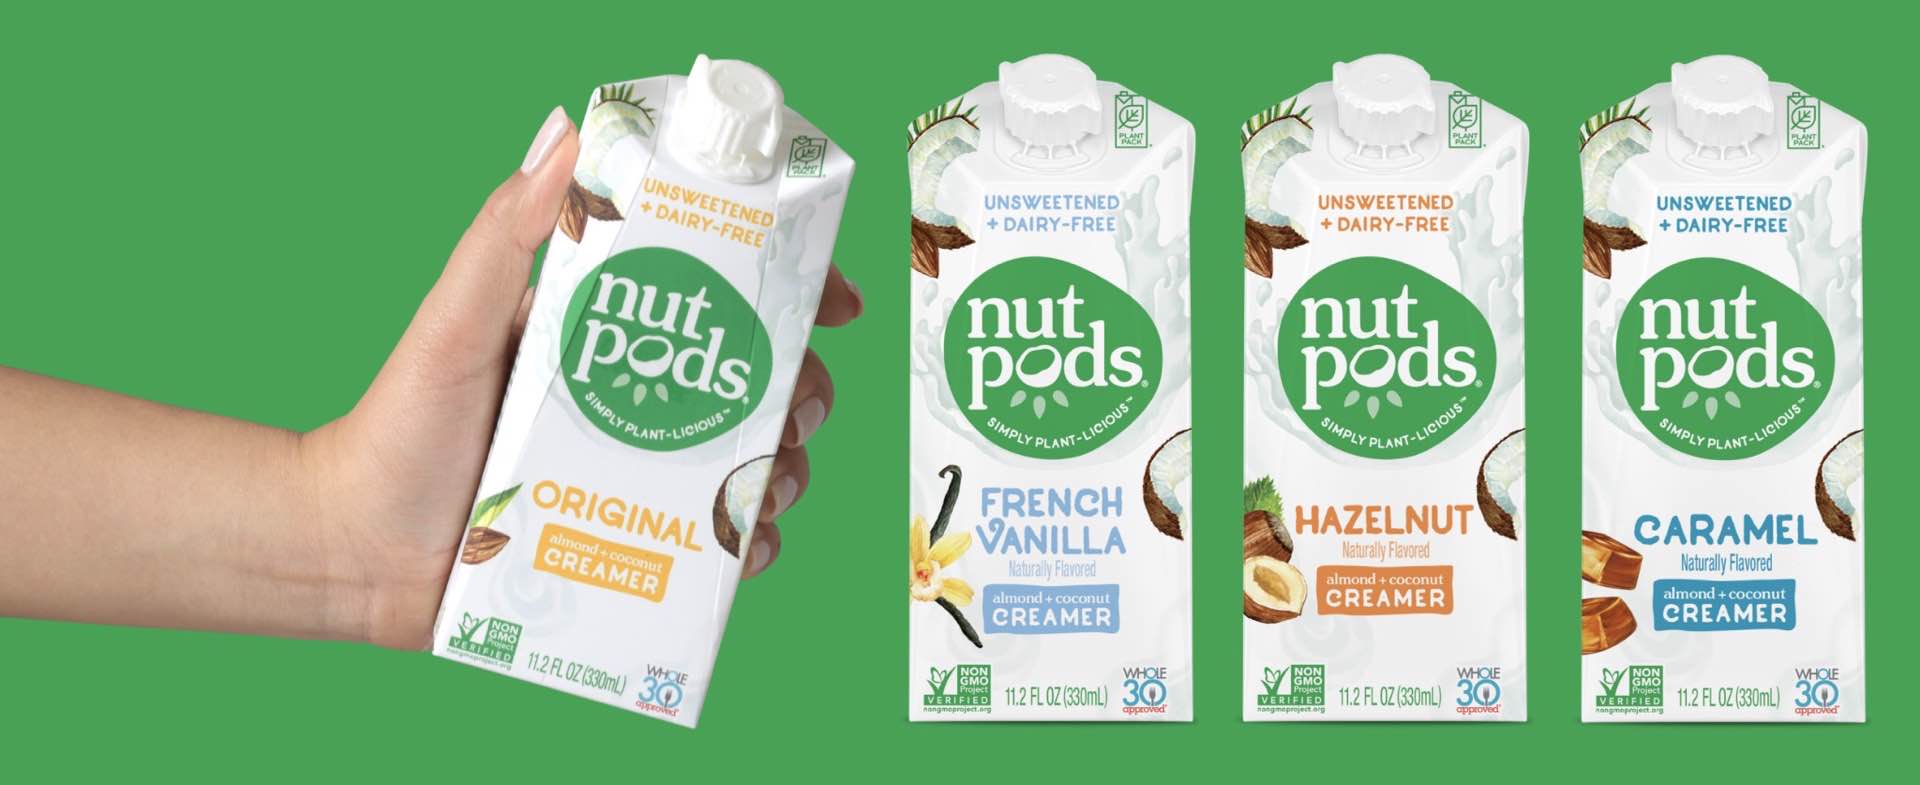 nutpods-dairy-free-creamer